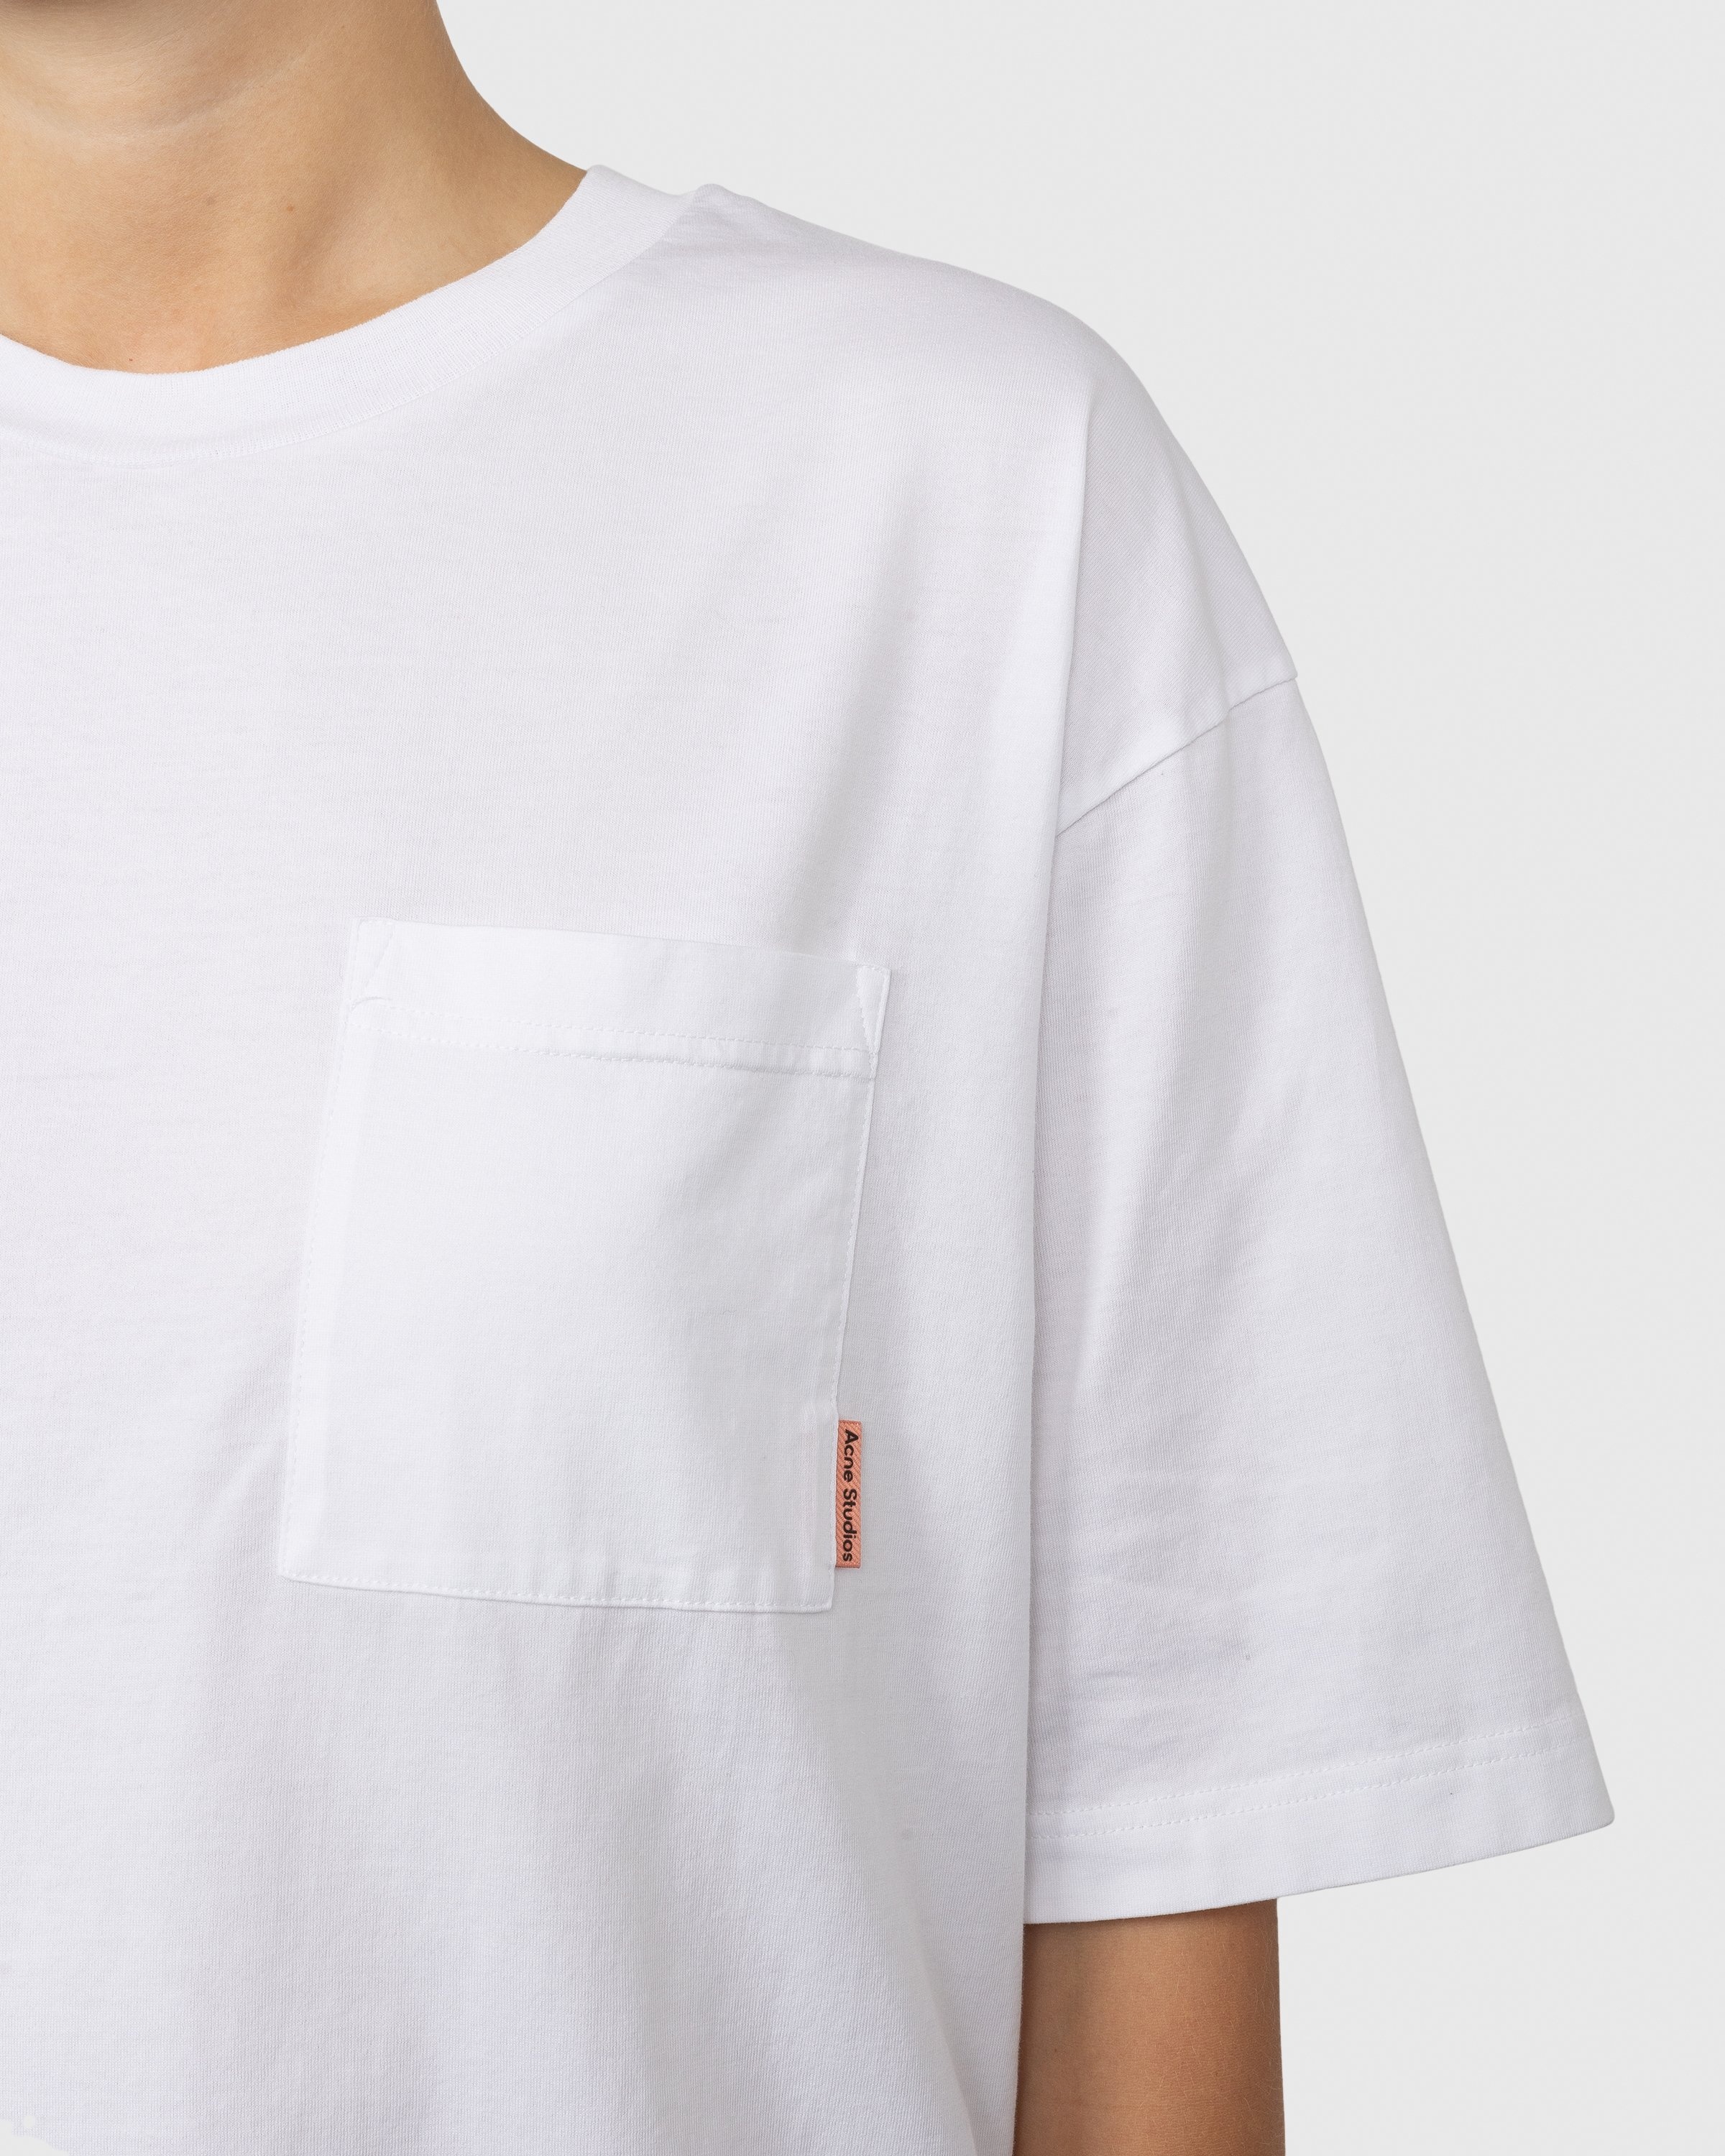 Acne Studios – Organic Cotton Pocket T-Shirt White - T-Shirts - White - Image 5